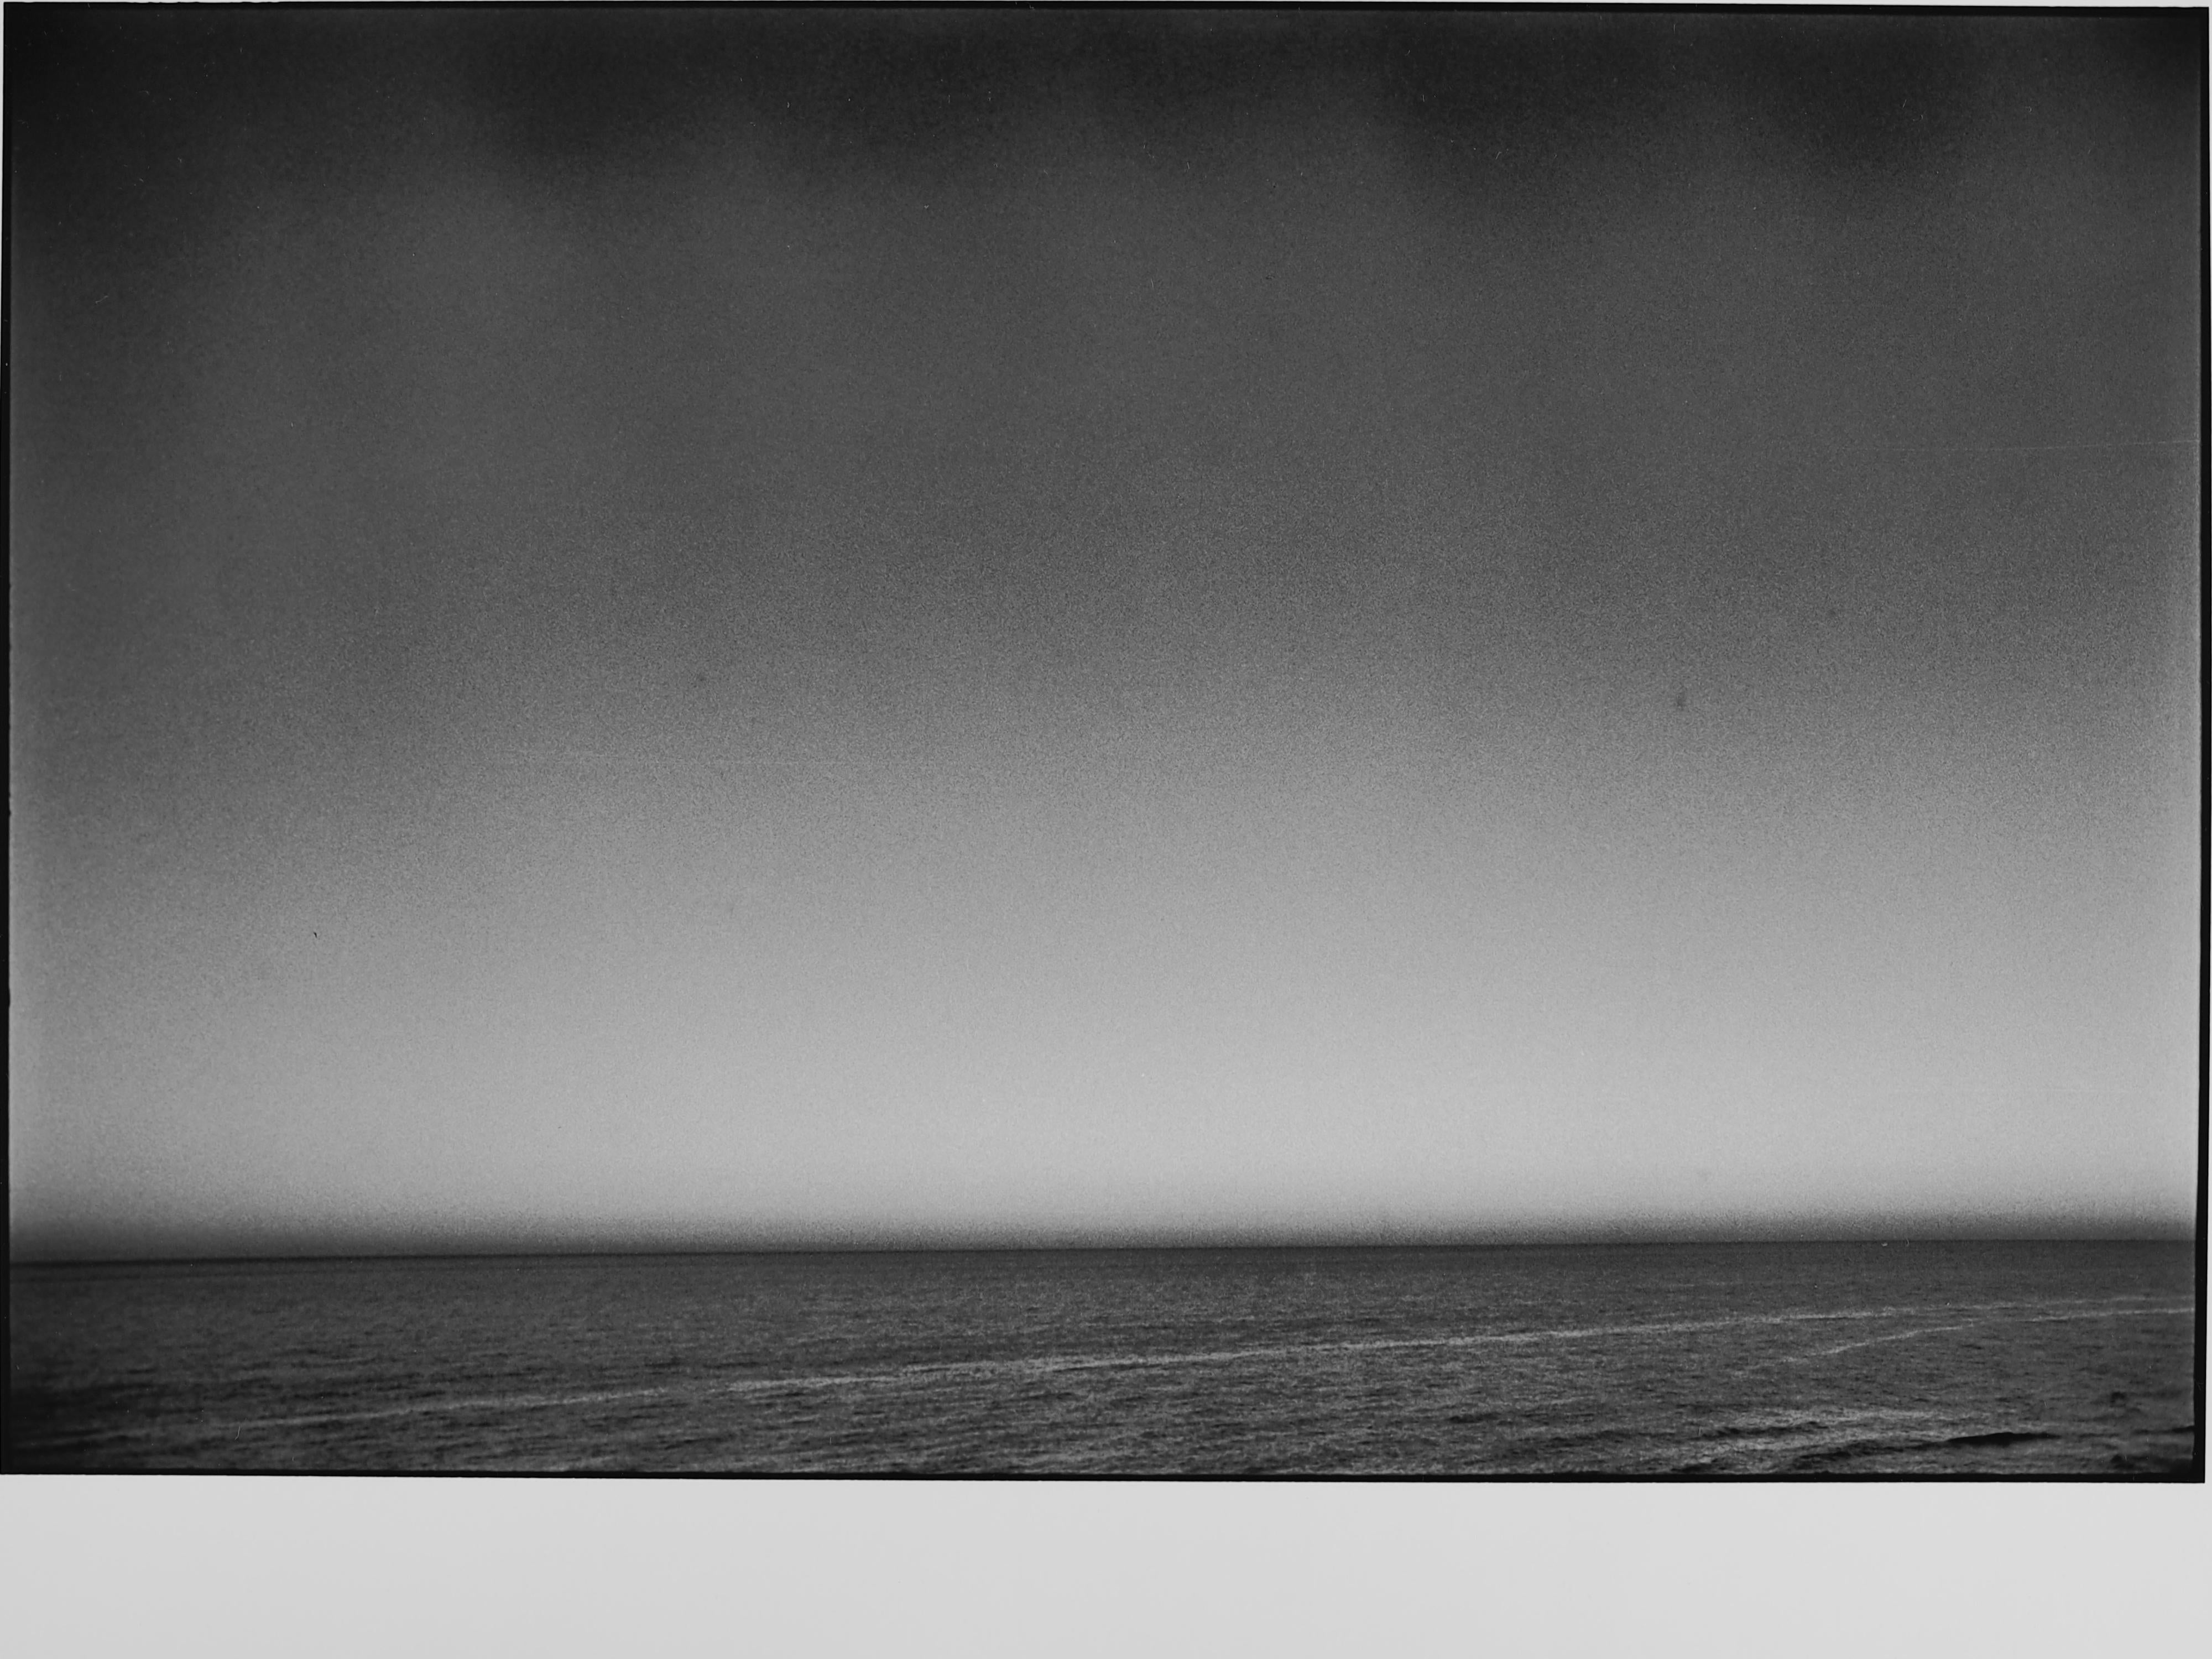 Koyo Tamaki Landscape Photograph - Untitled (0708-15), Photographic Print on Silver Gelatin, 2012